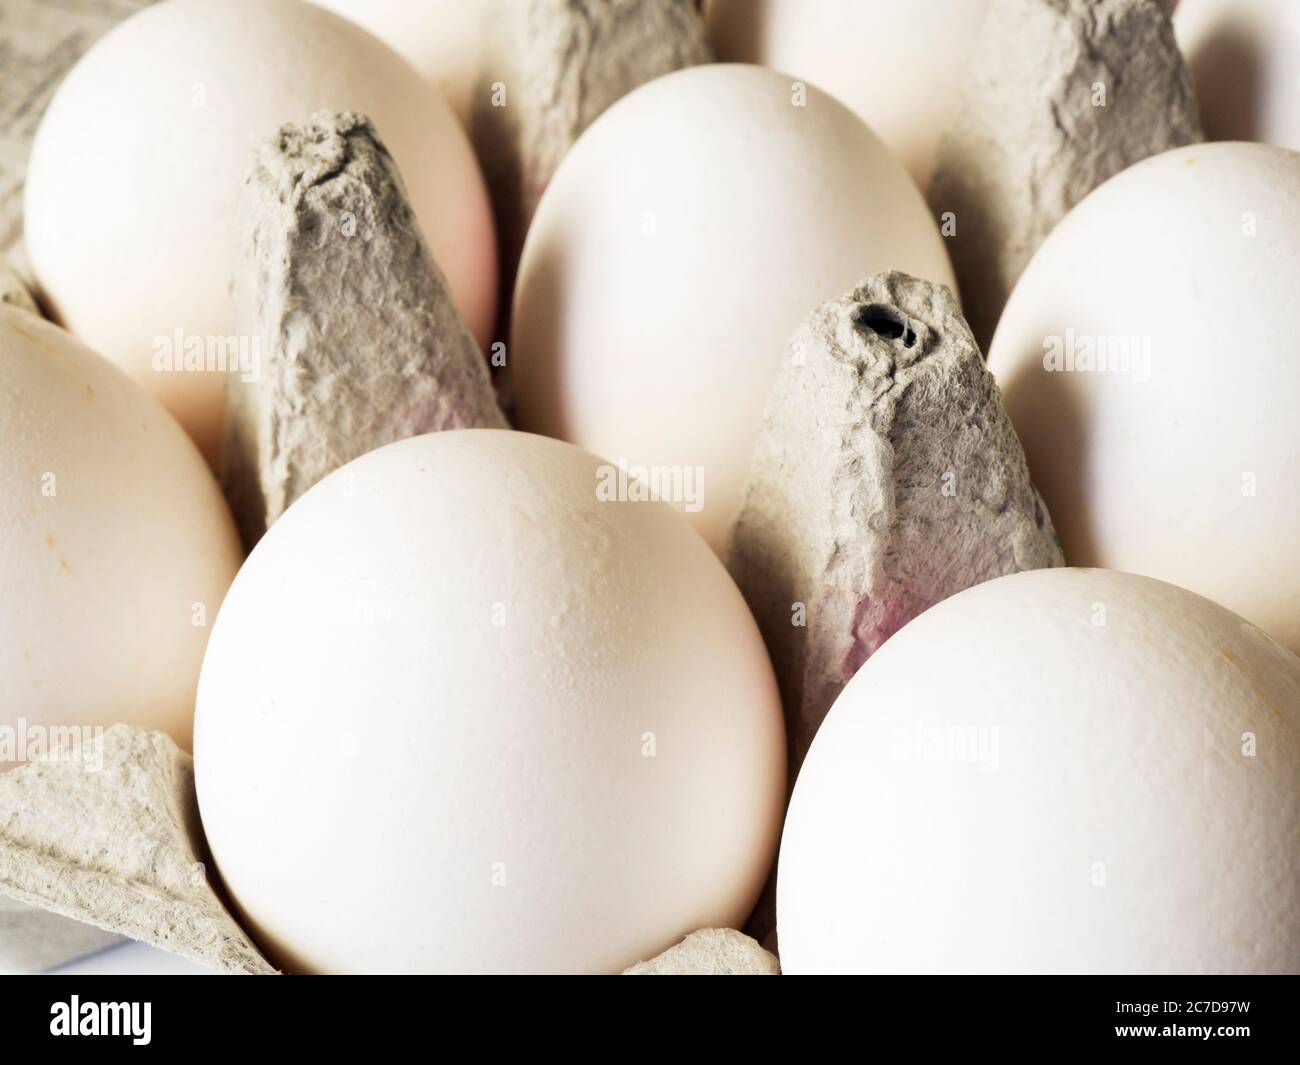 A tray of white eggs Stock Photo